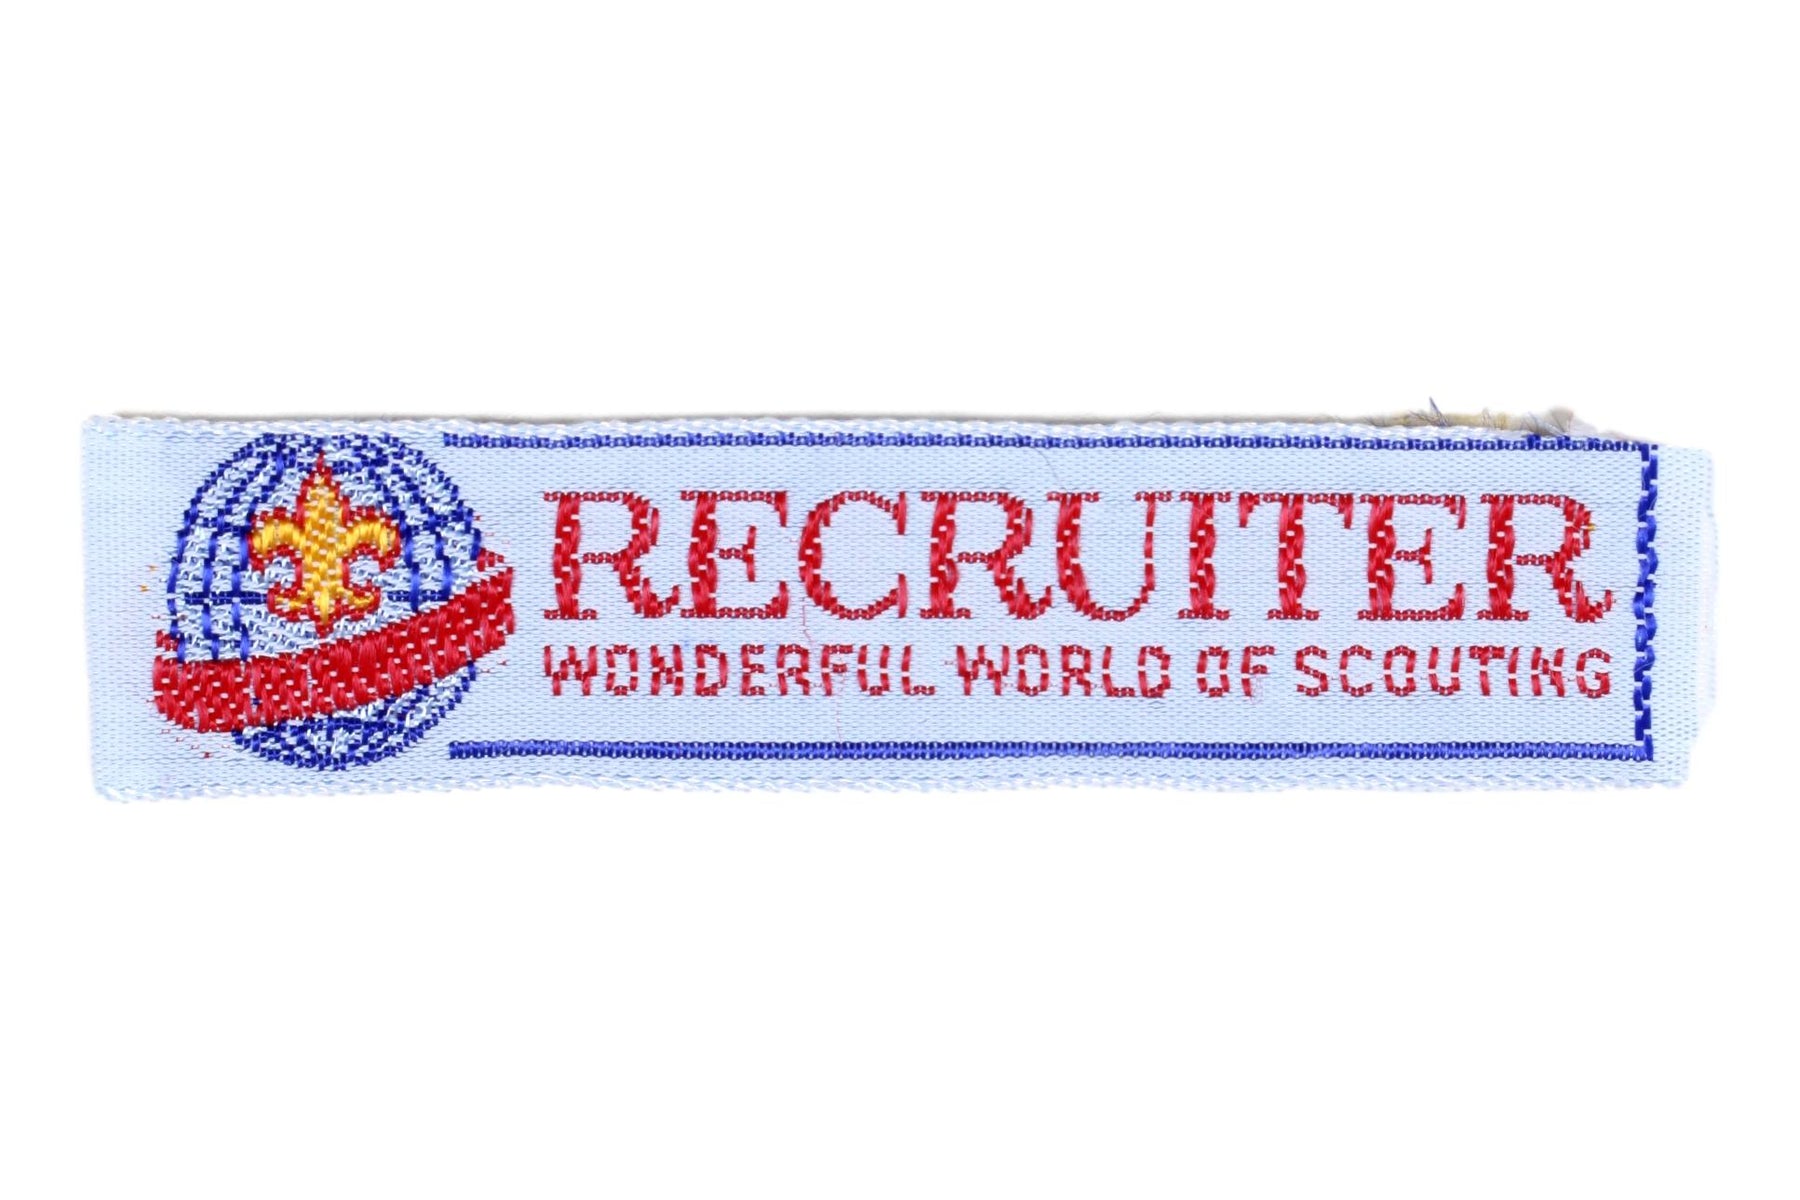 Recruiter Strip Silk Wonderful World of Scouting